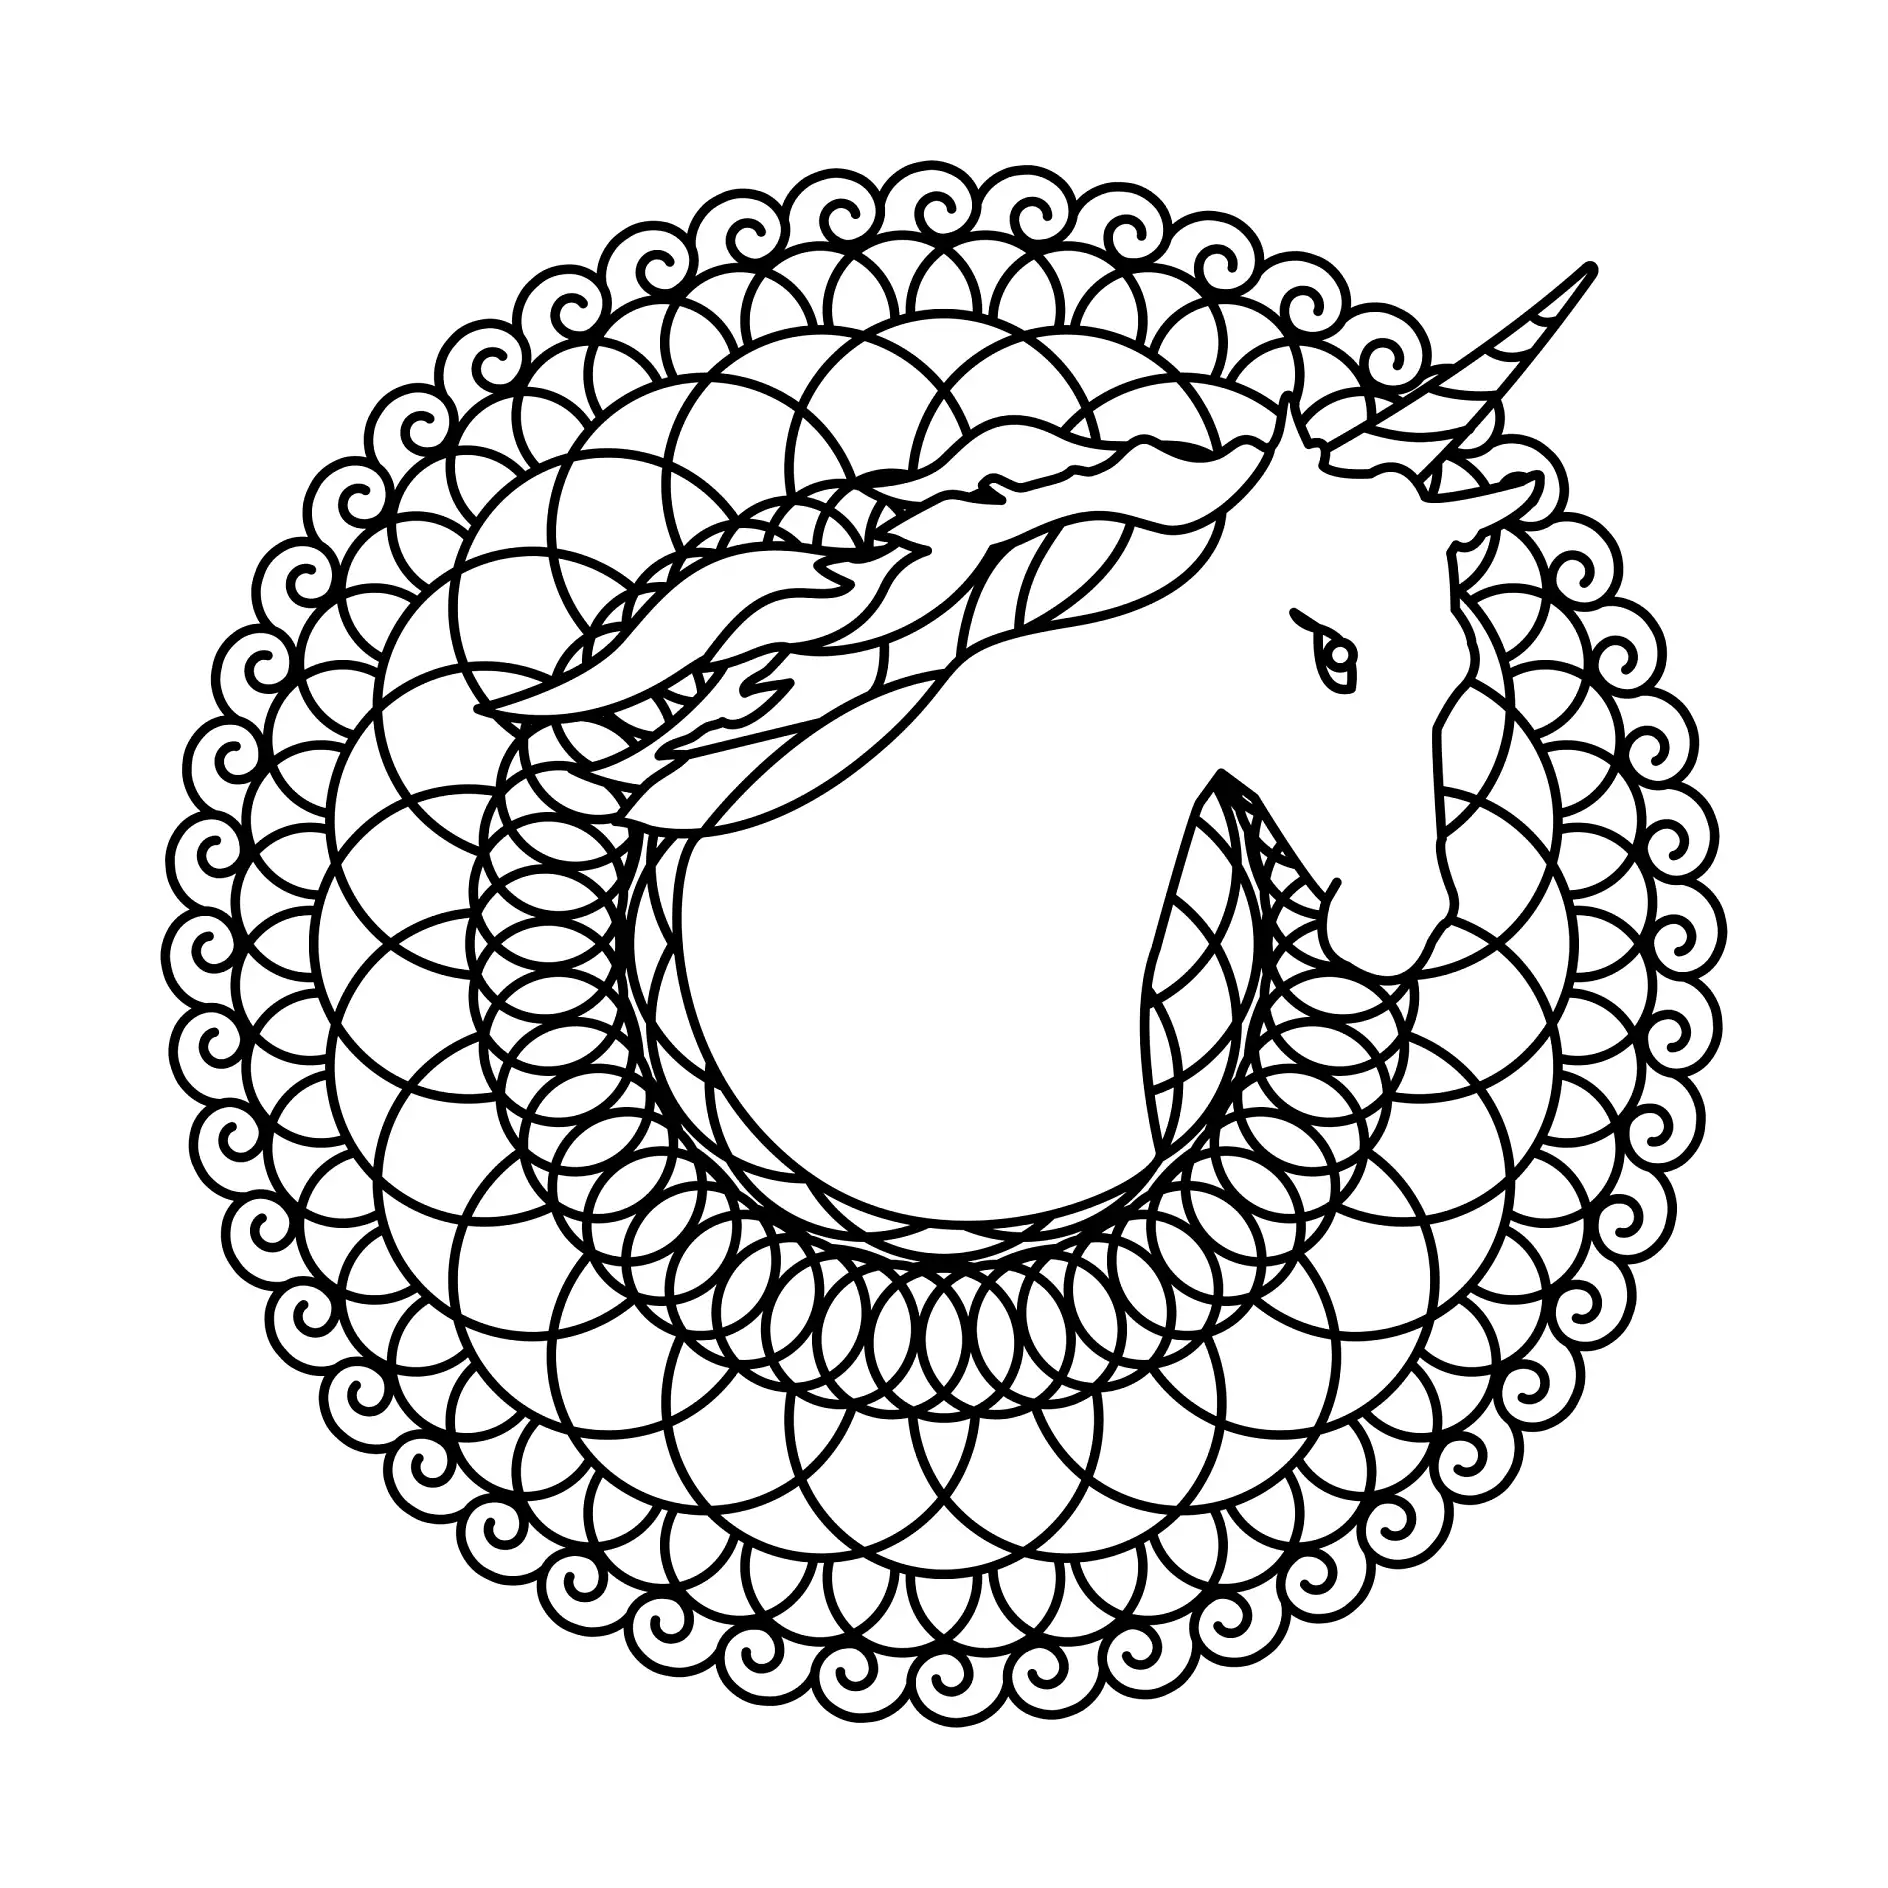 Ausmalbild Mandala Einhorn mit kreisförmigen Mustern